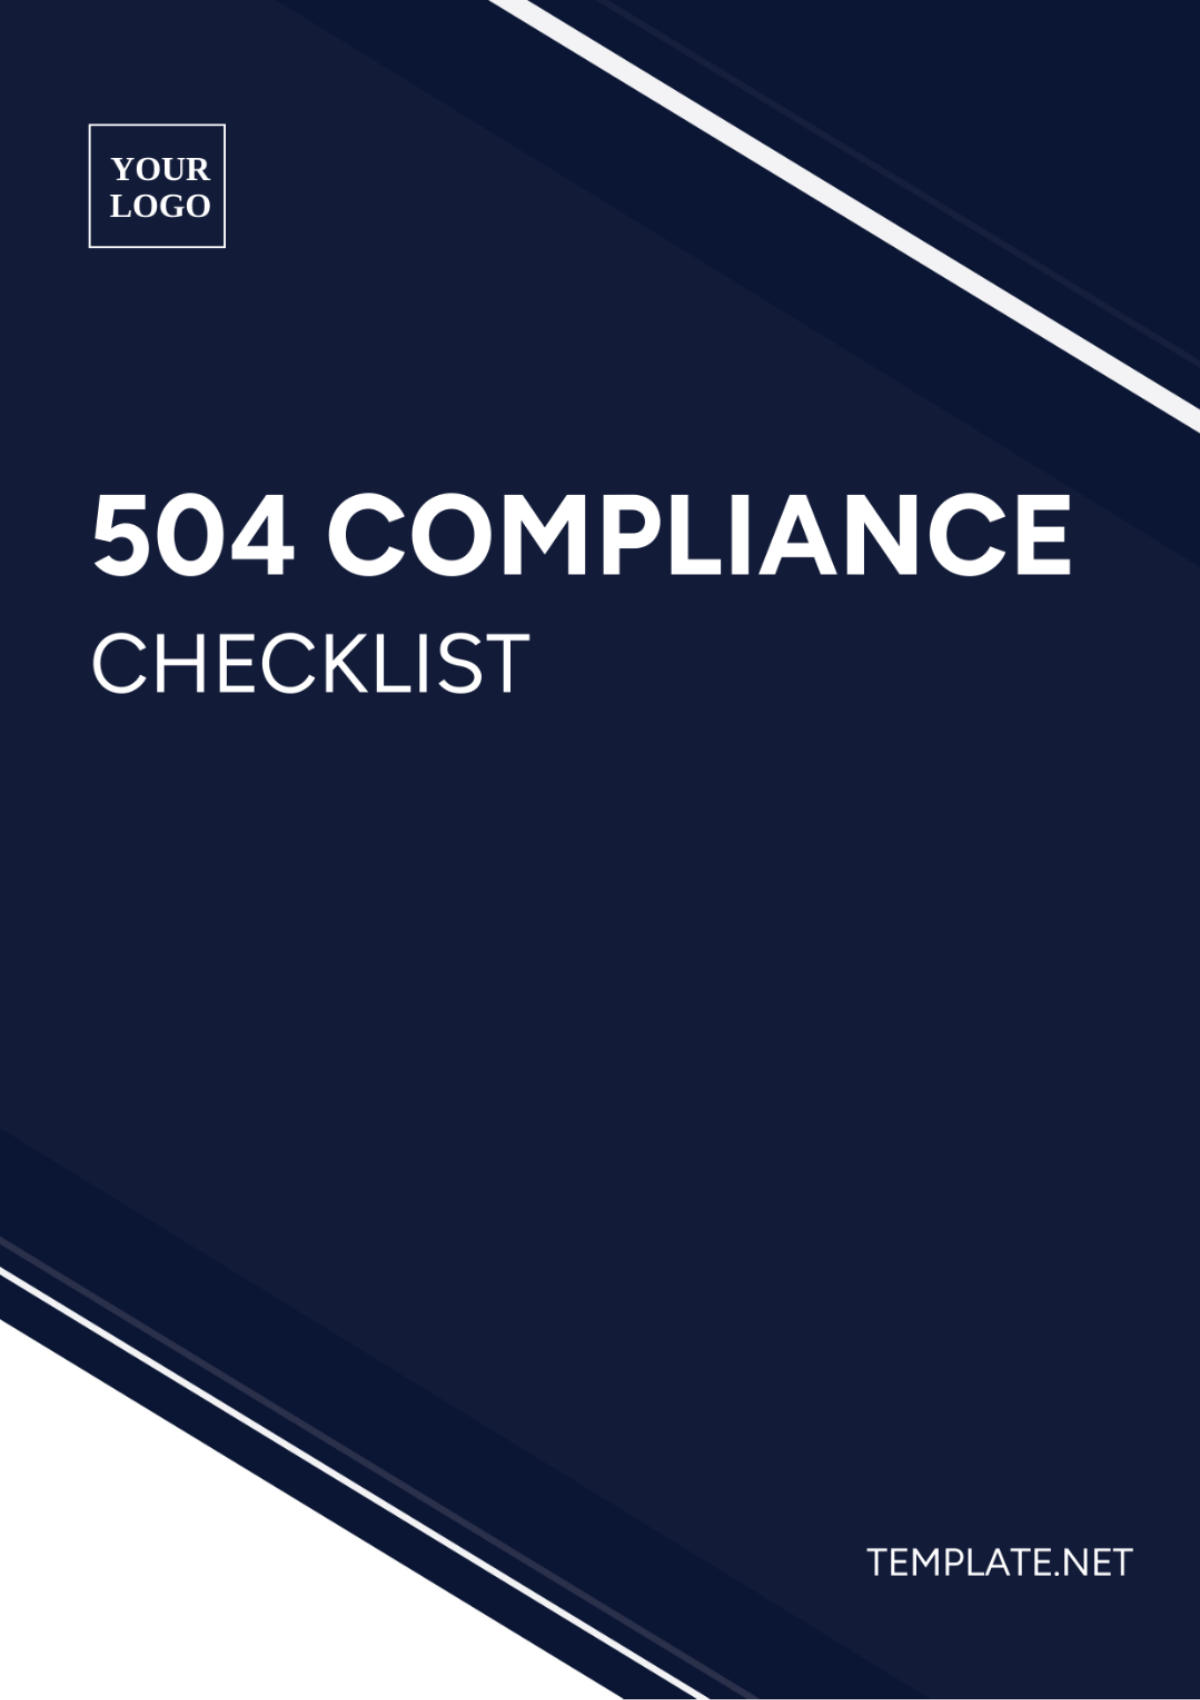 504 Compliance Checklist Template